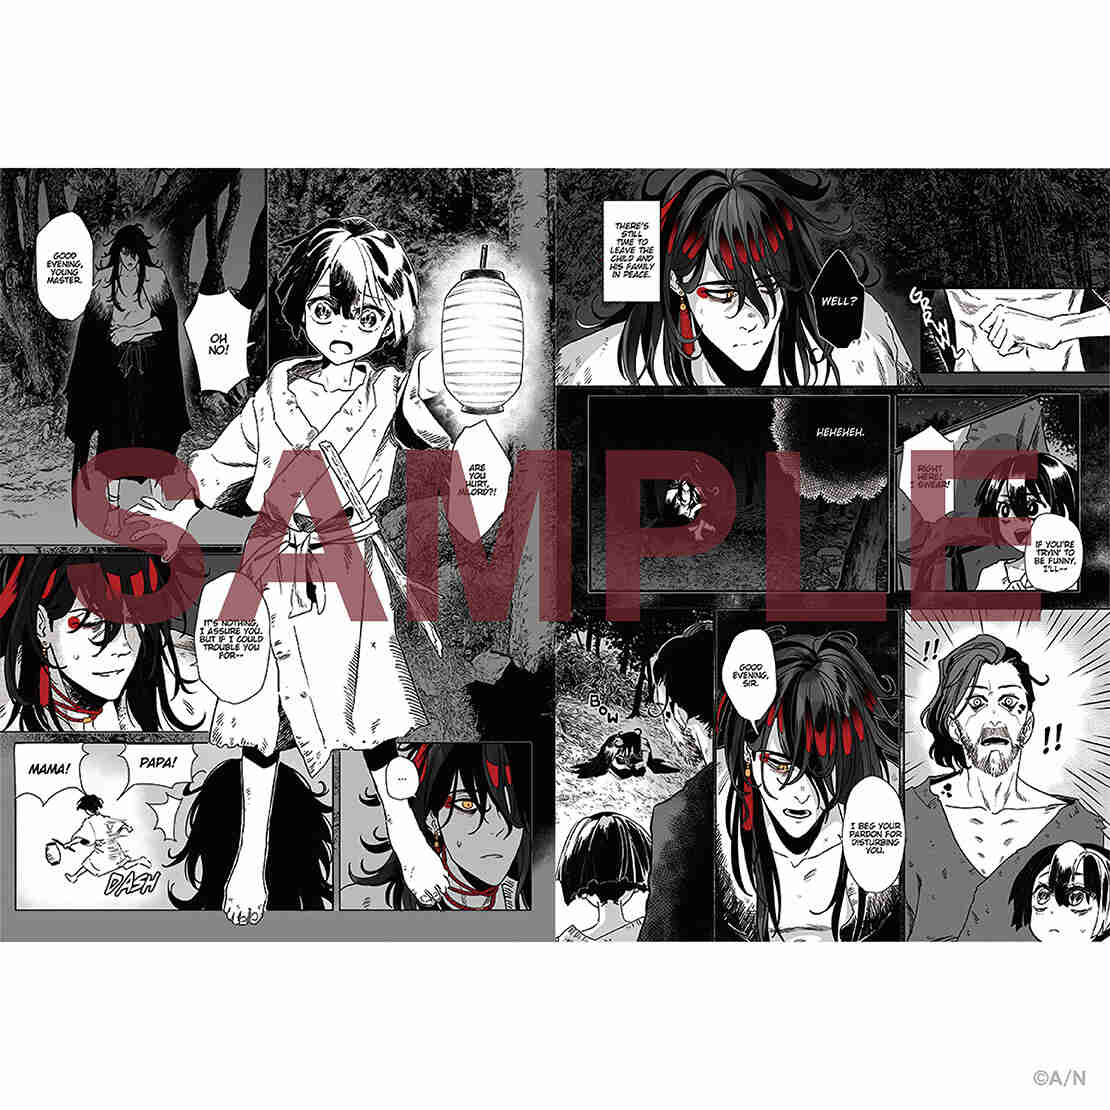 [pre-order] Nijisanji 【Vox Akuma:The Demon Hungers】Graphic Novel / Poster